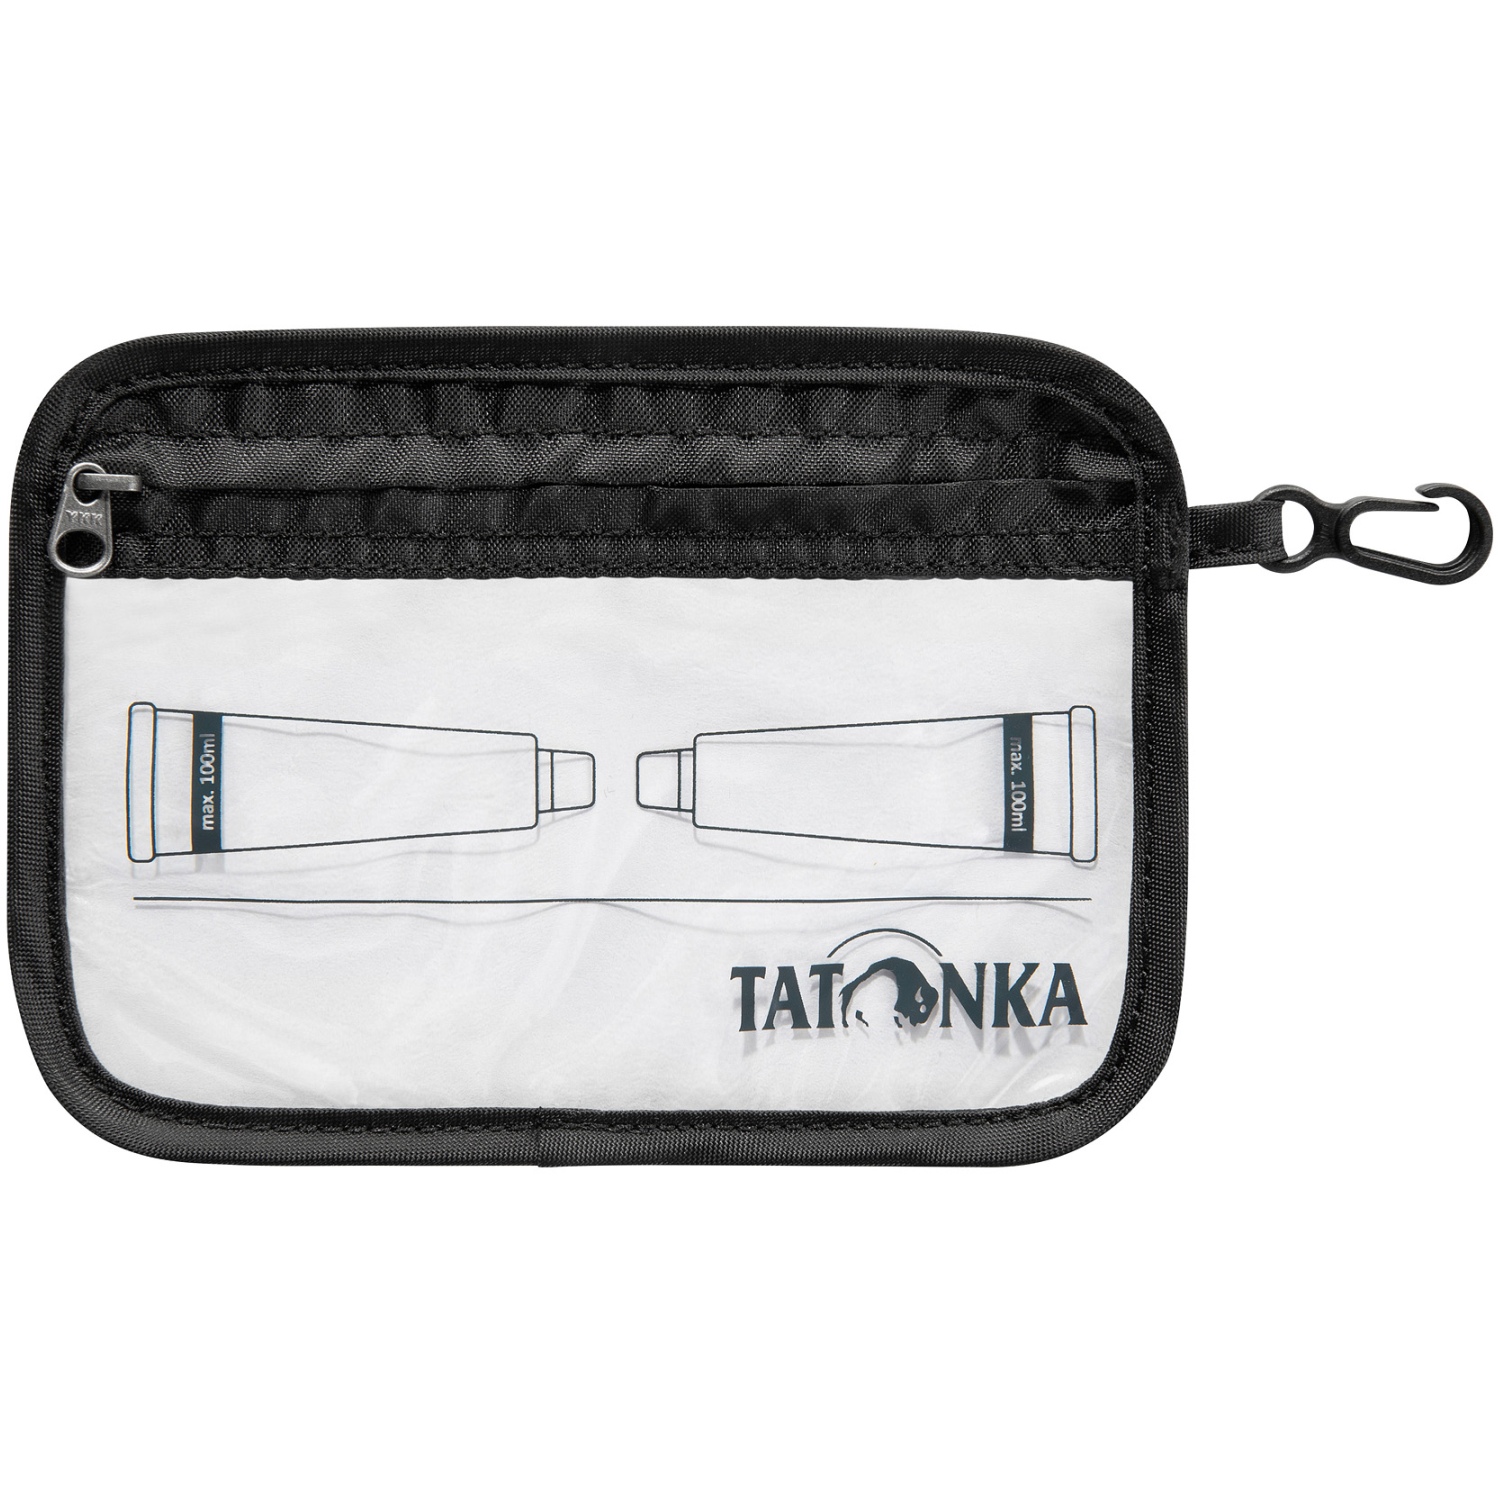 Produktbild von Tatonka Zip Flight Bag A6 Flugzeug-Beutel - schwarz